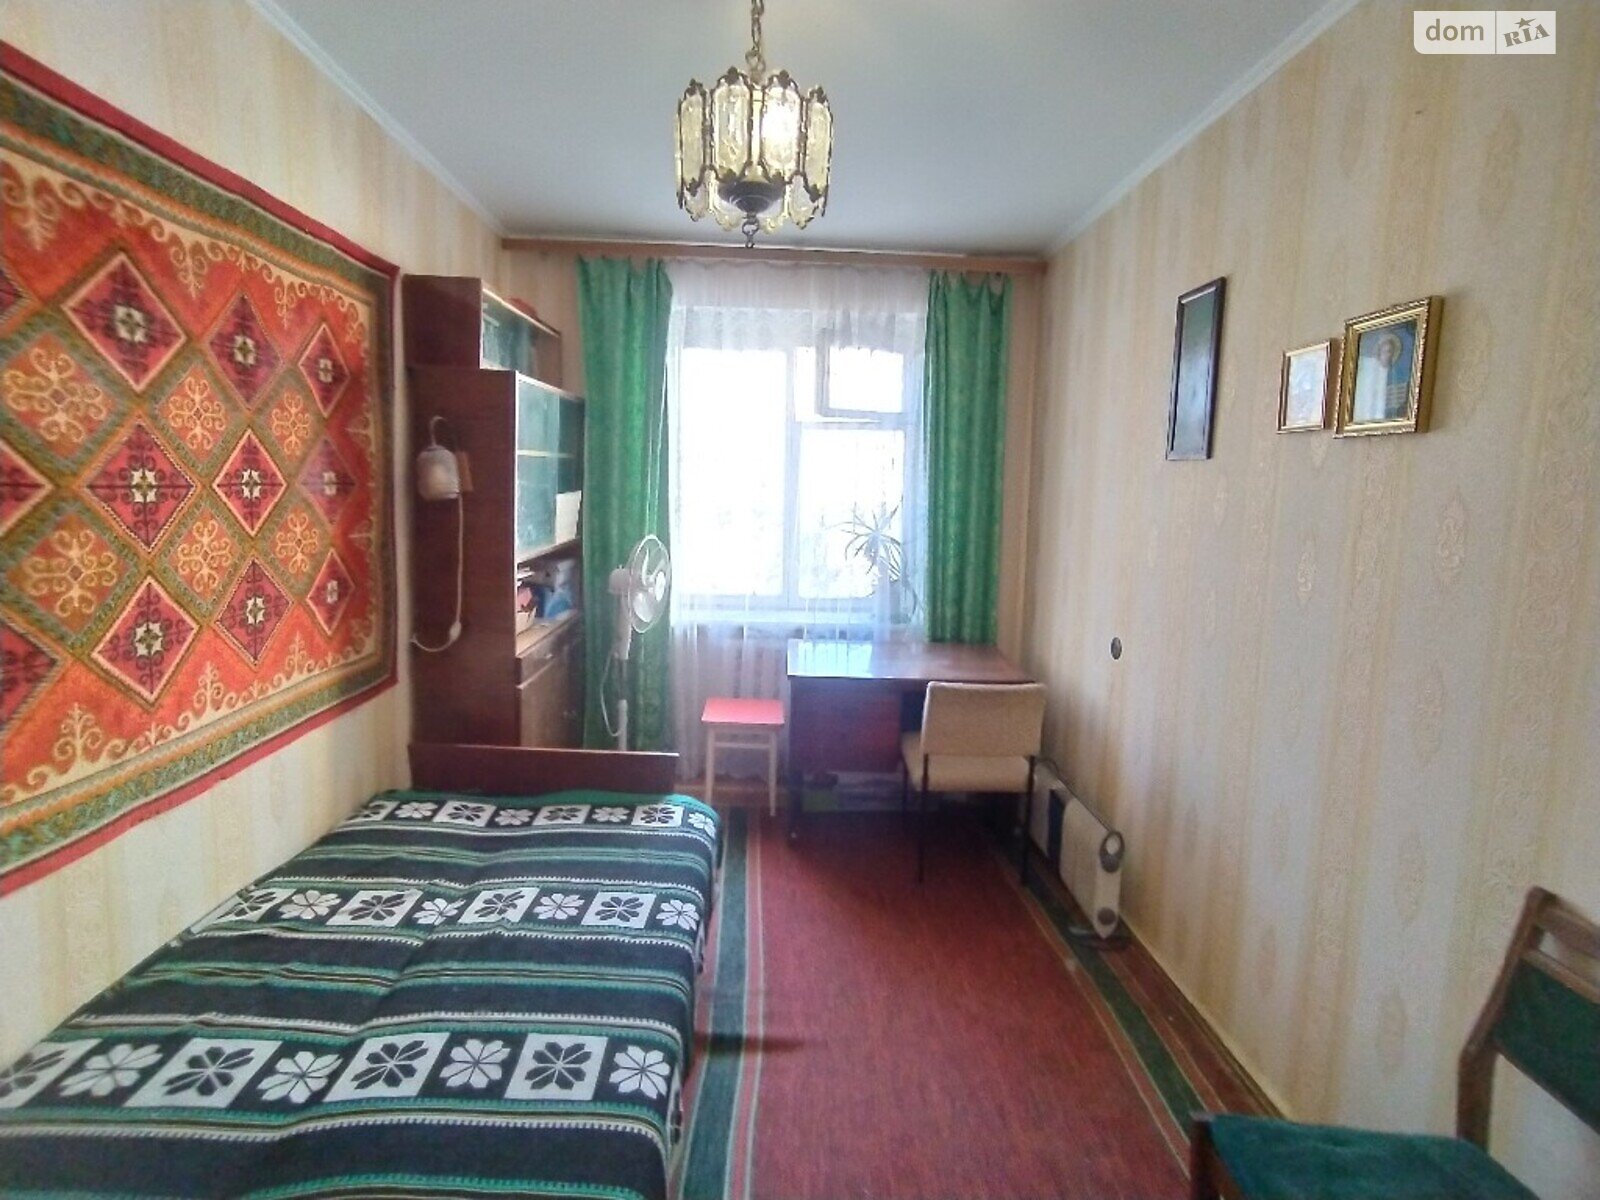 Продажа трехкомнатной квартиры в Виннице, на ул. Келецкая 66, район Вишенка фото 1